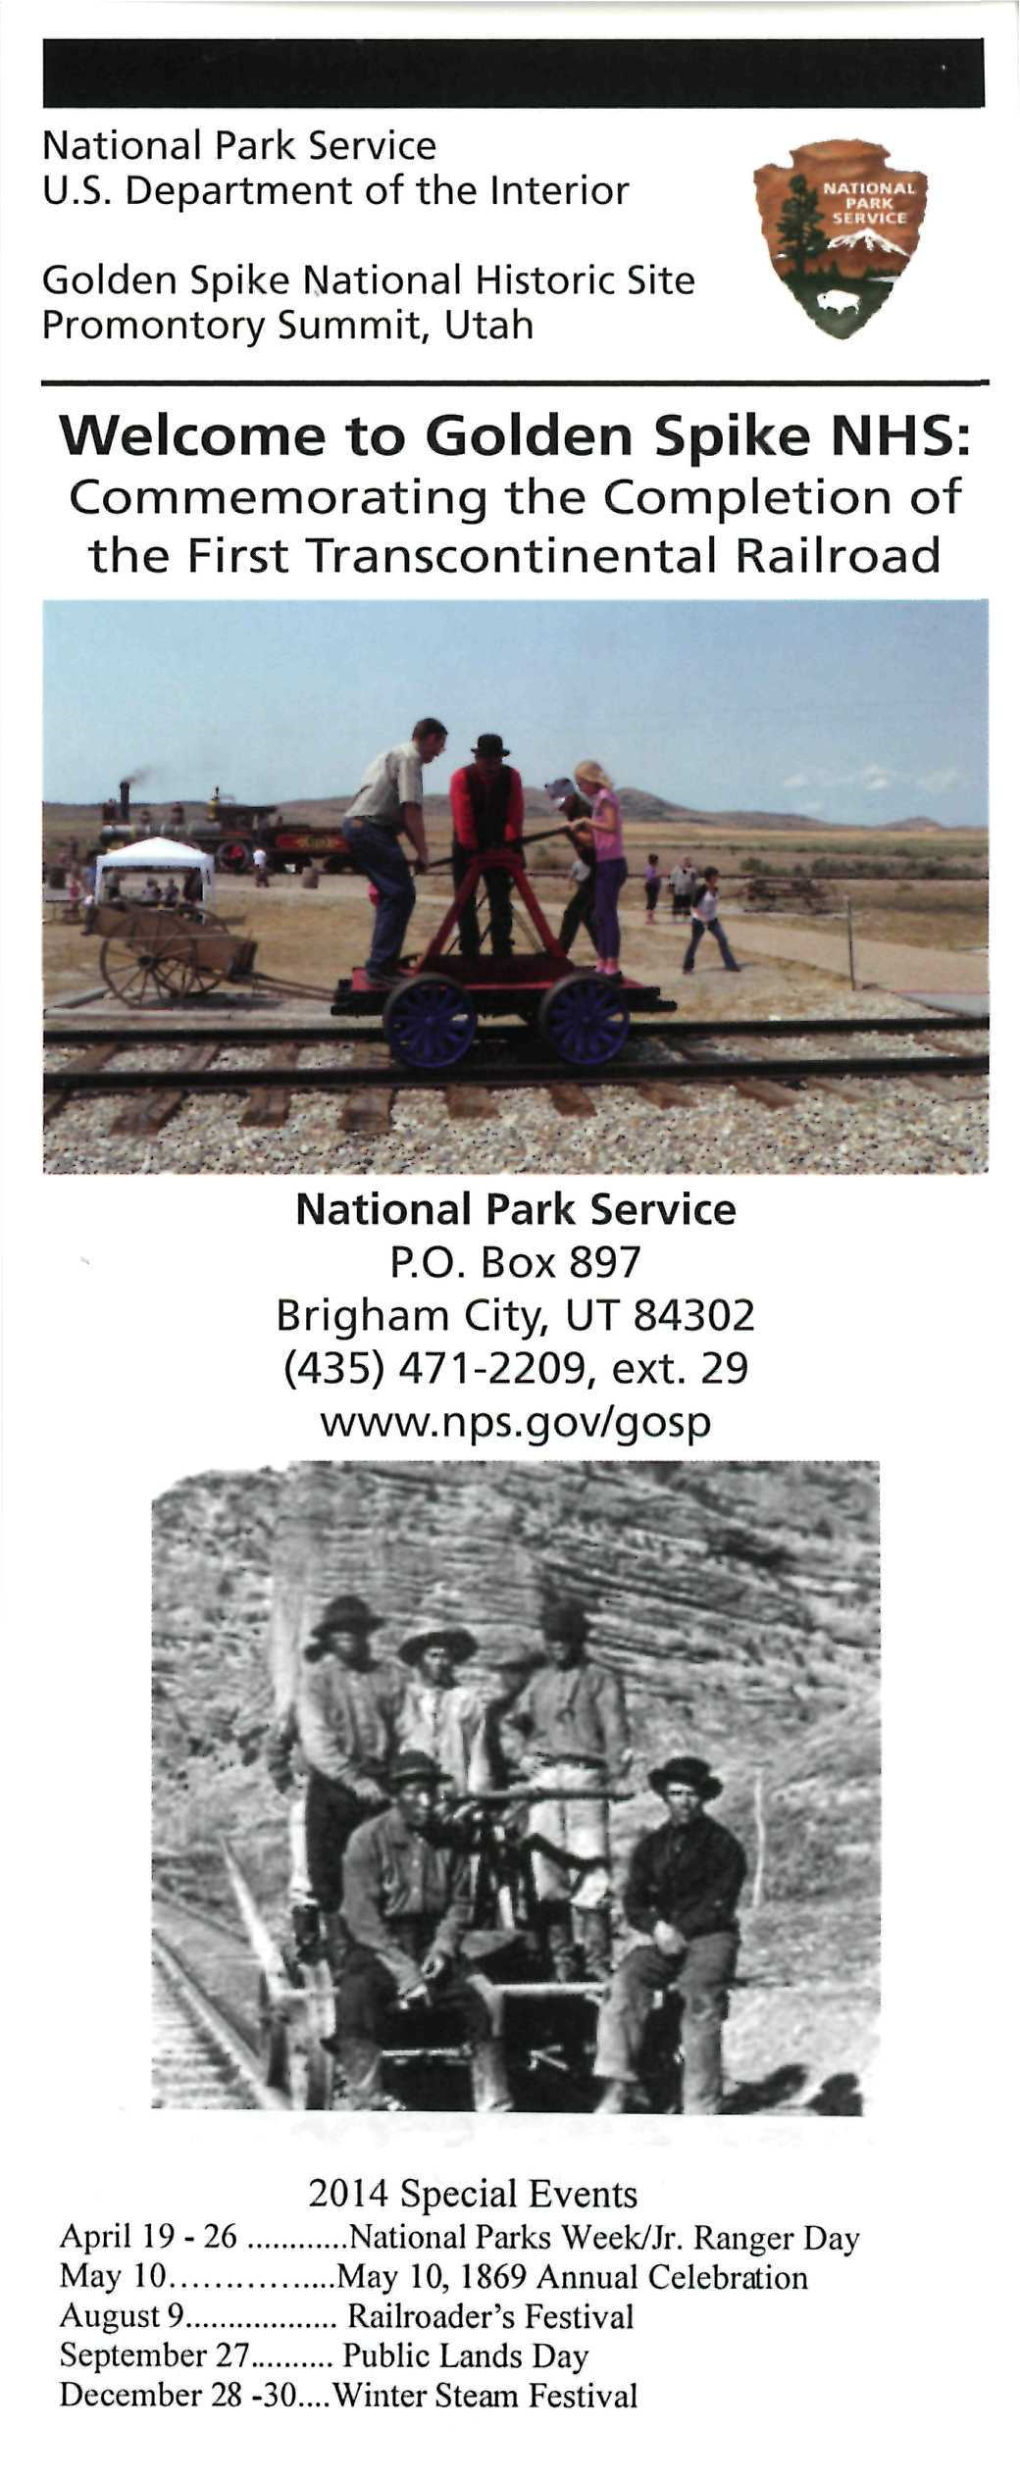 Golden Spike National Historic Site Promontory Summit, Utah